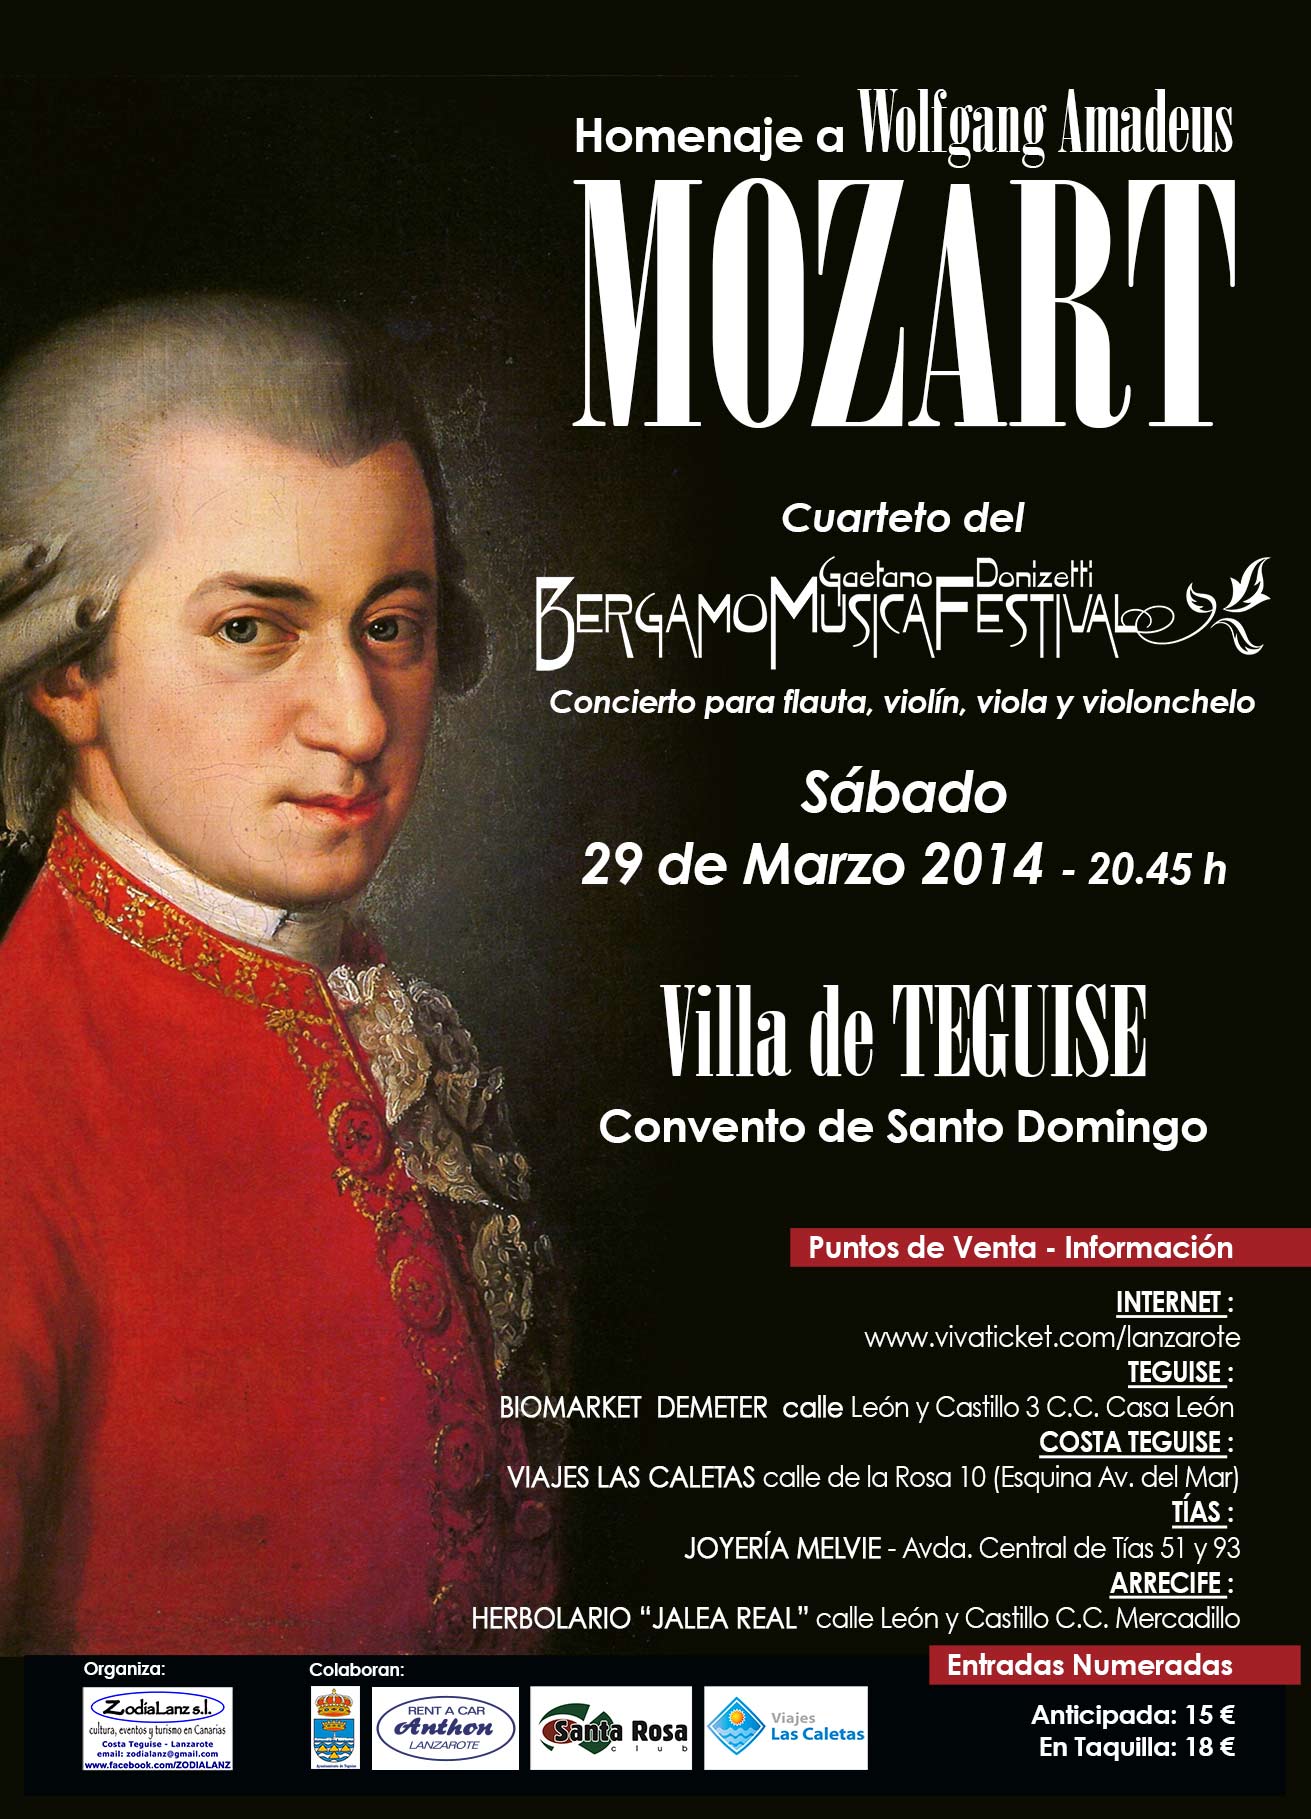 Homenaje a Wolfgang Amadeus Mozart en Lanzarote 